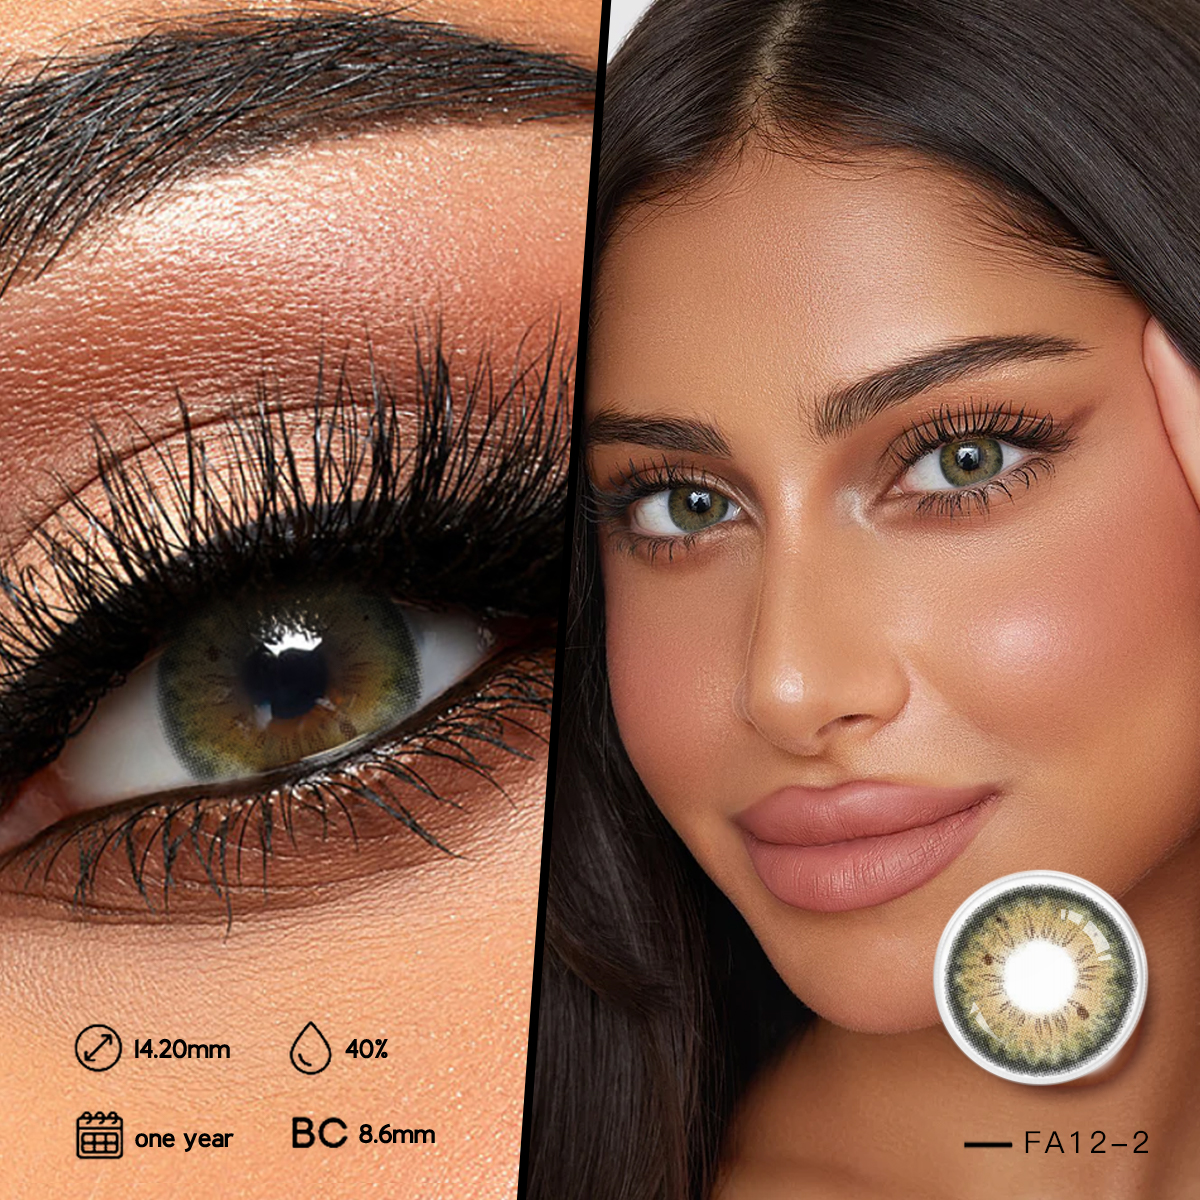 Tinuig nga Natural Colored Contact Lens Komportable brown Contacts Color Eye Contact Lens wholesale Lens